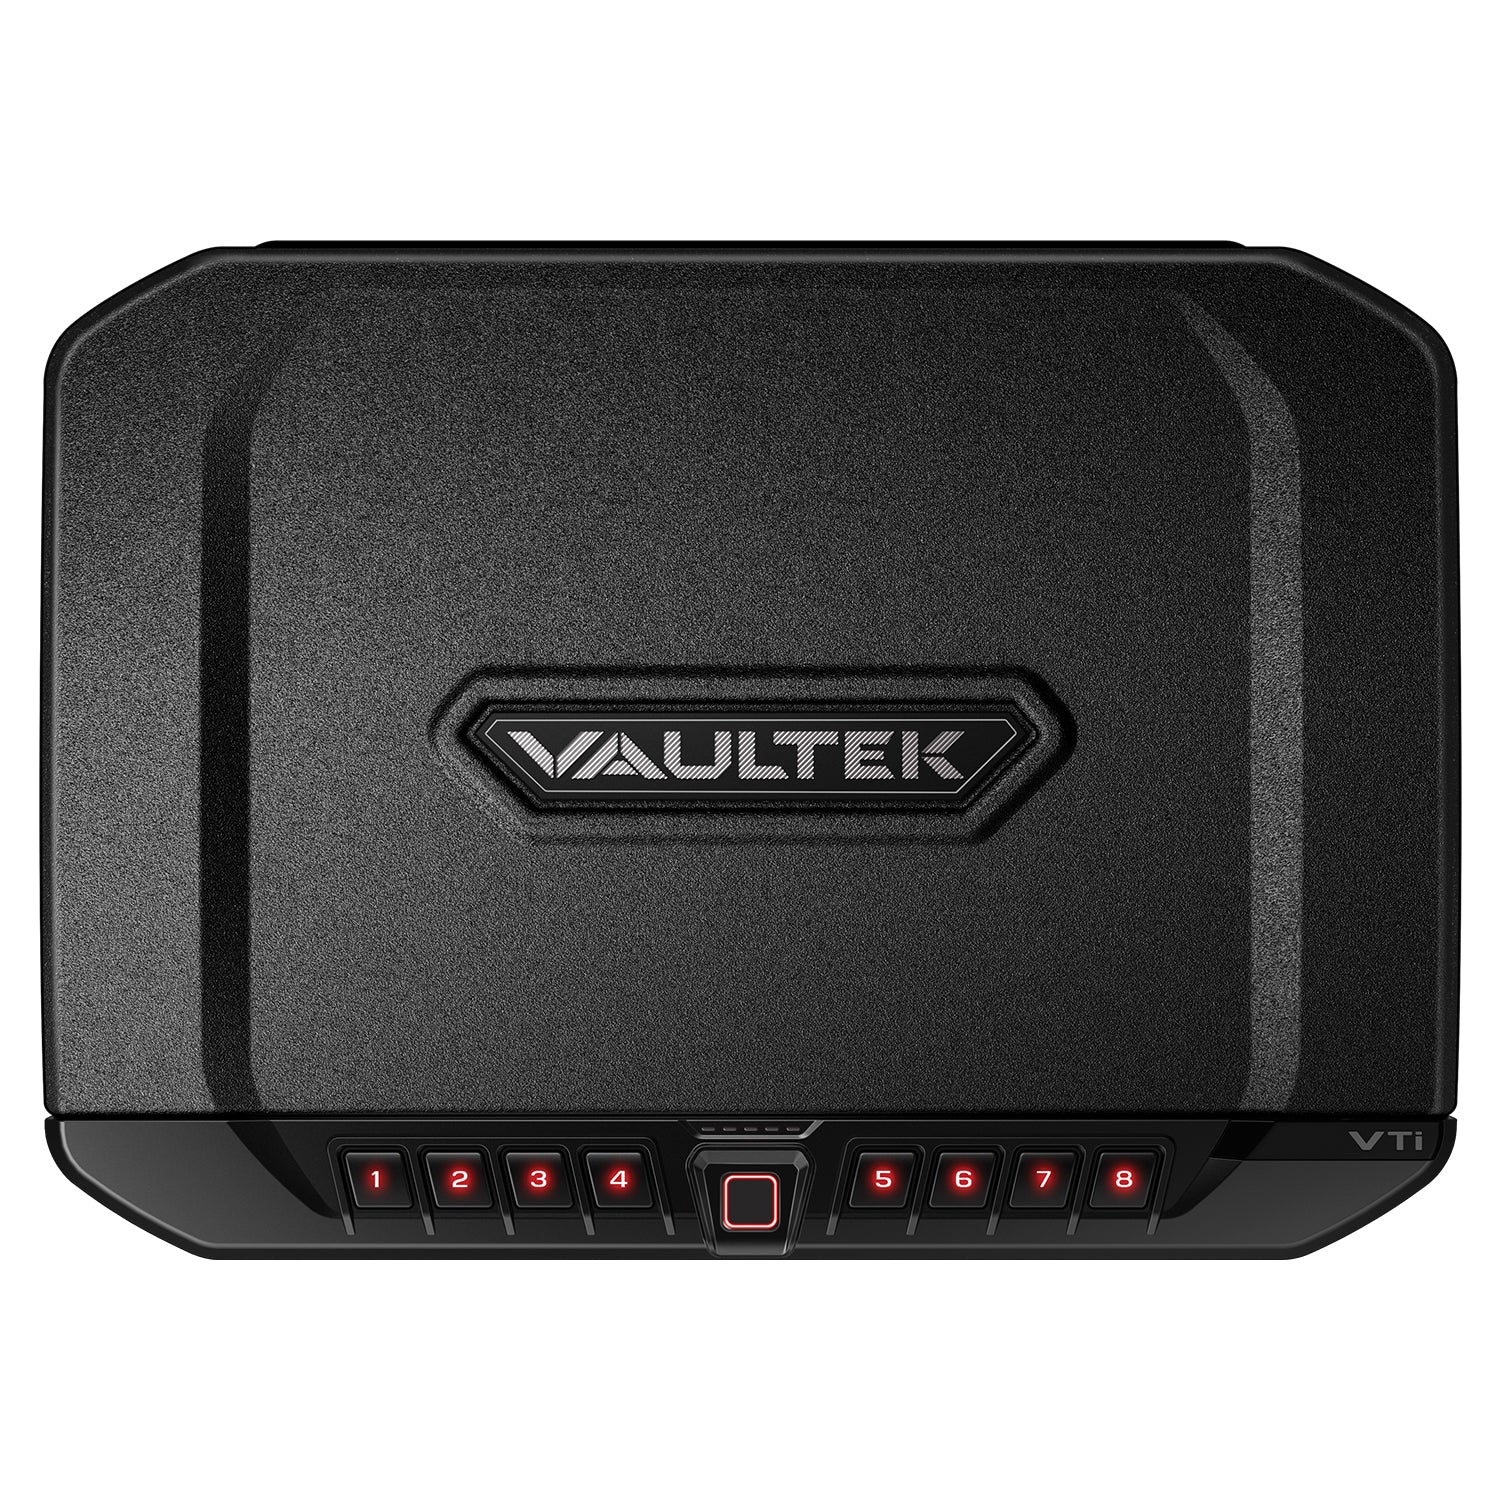 Vaultek® nvti full size rugged wifi and biometric smart safe - MODLOCK